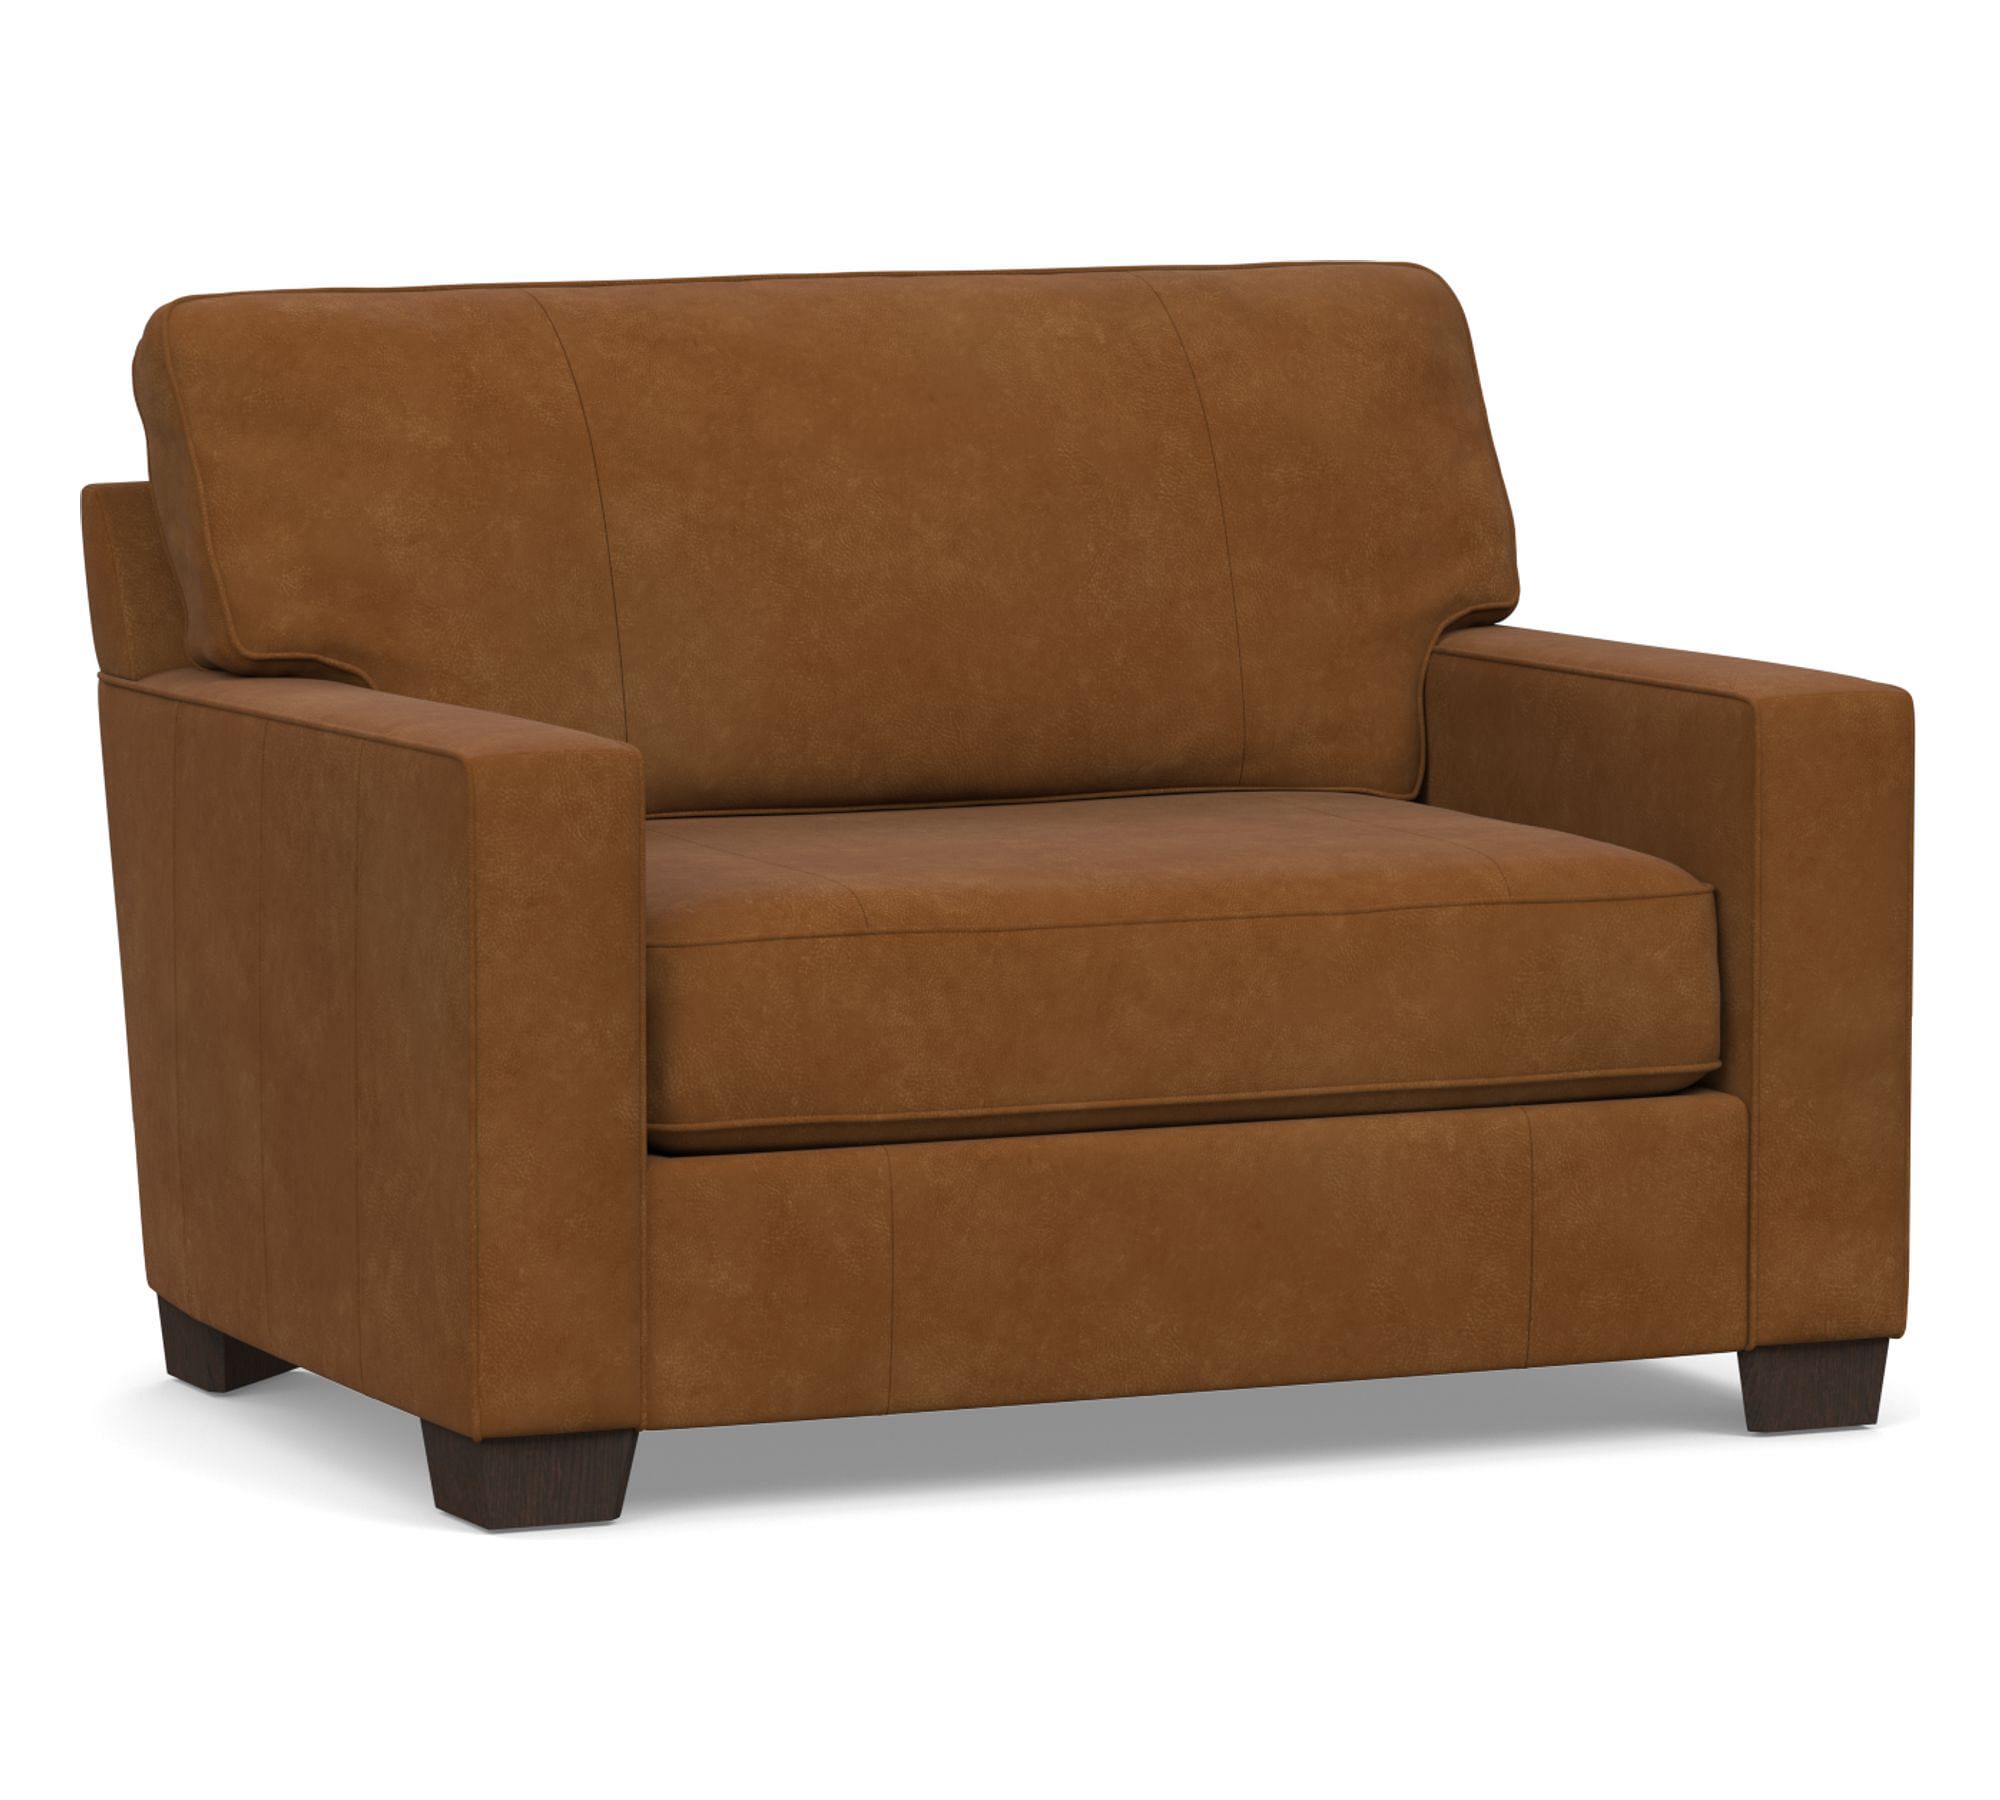 Buchanan Square Arm Leather Twin Sleeper Sofa with Memory Foam Mattress (54")